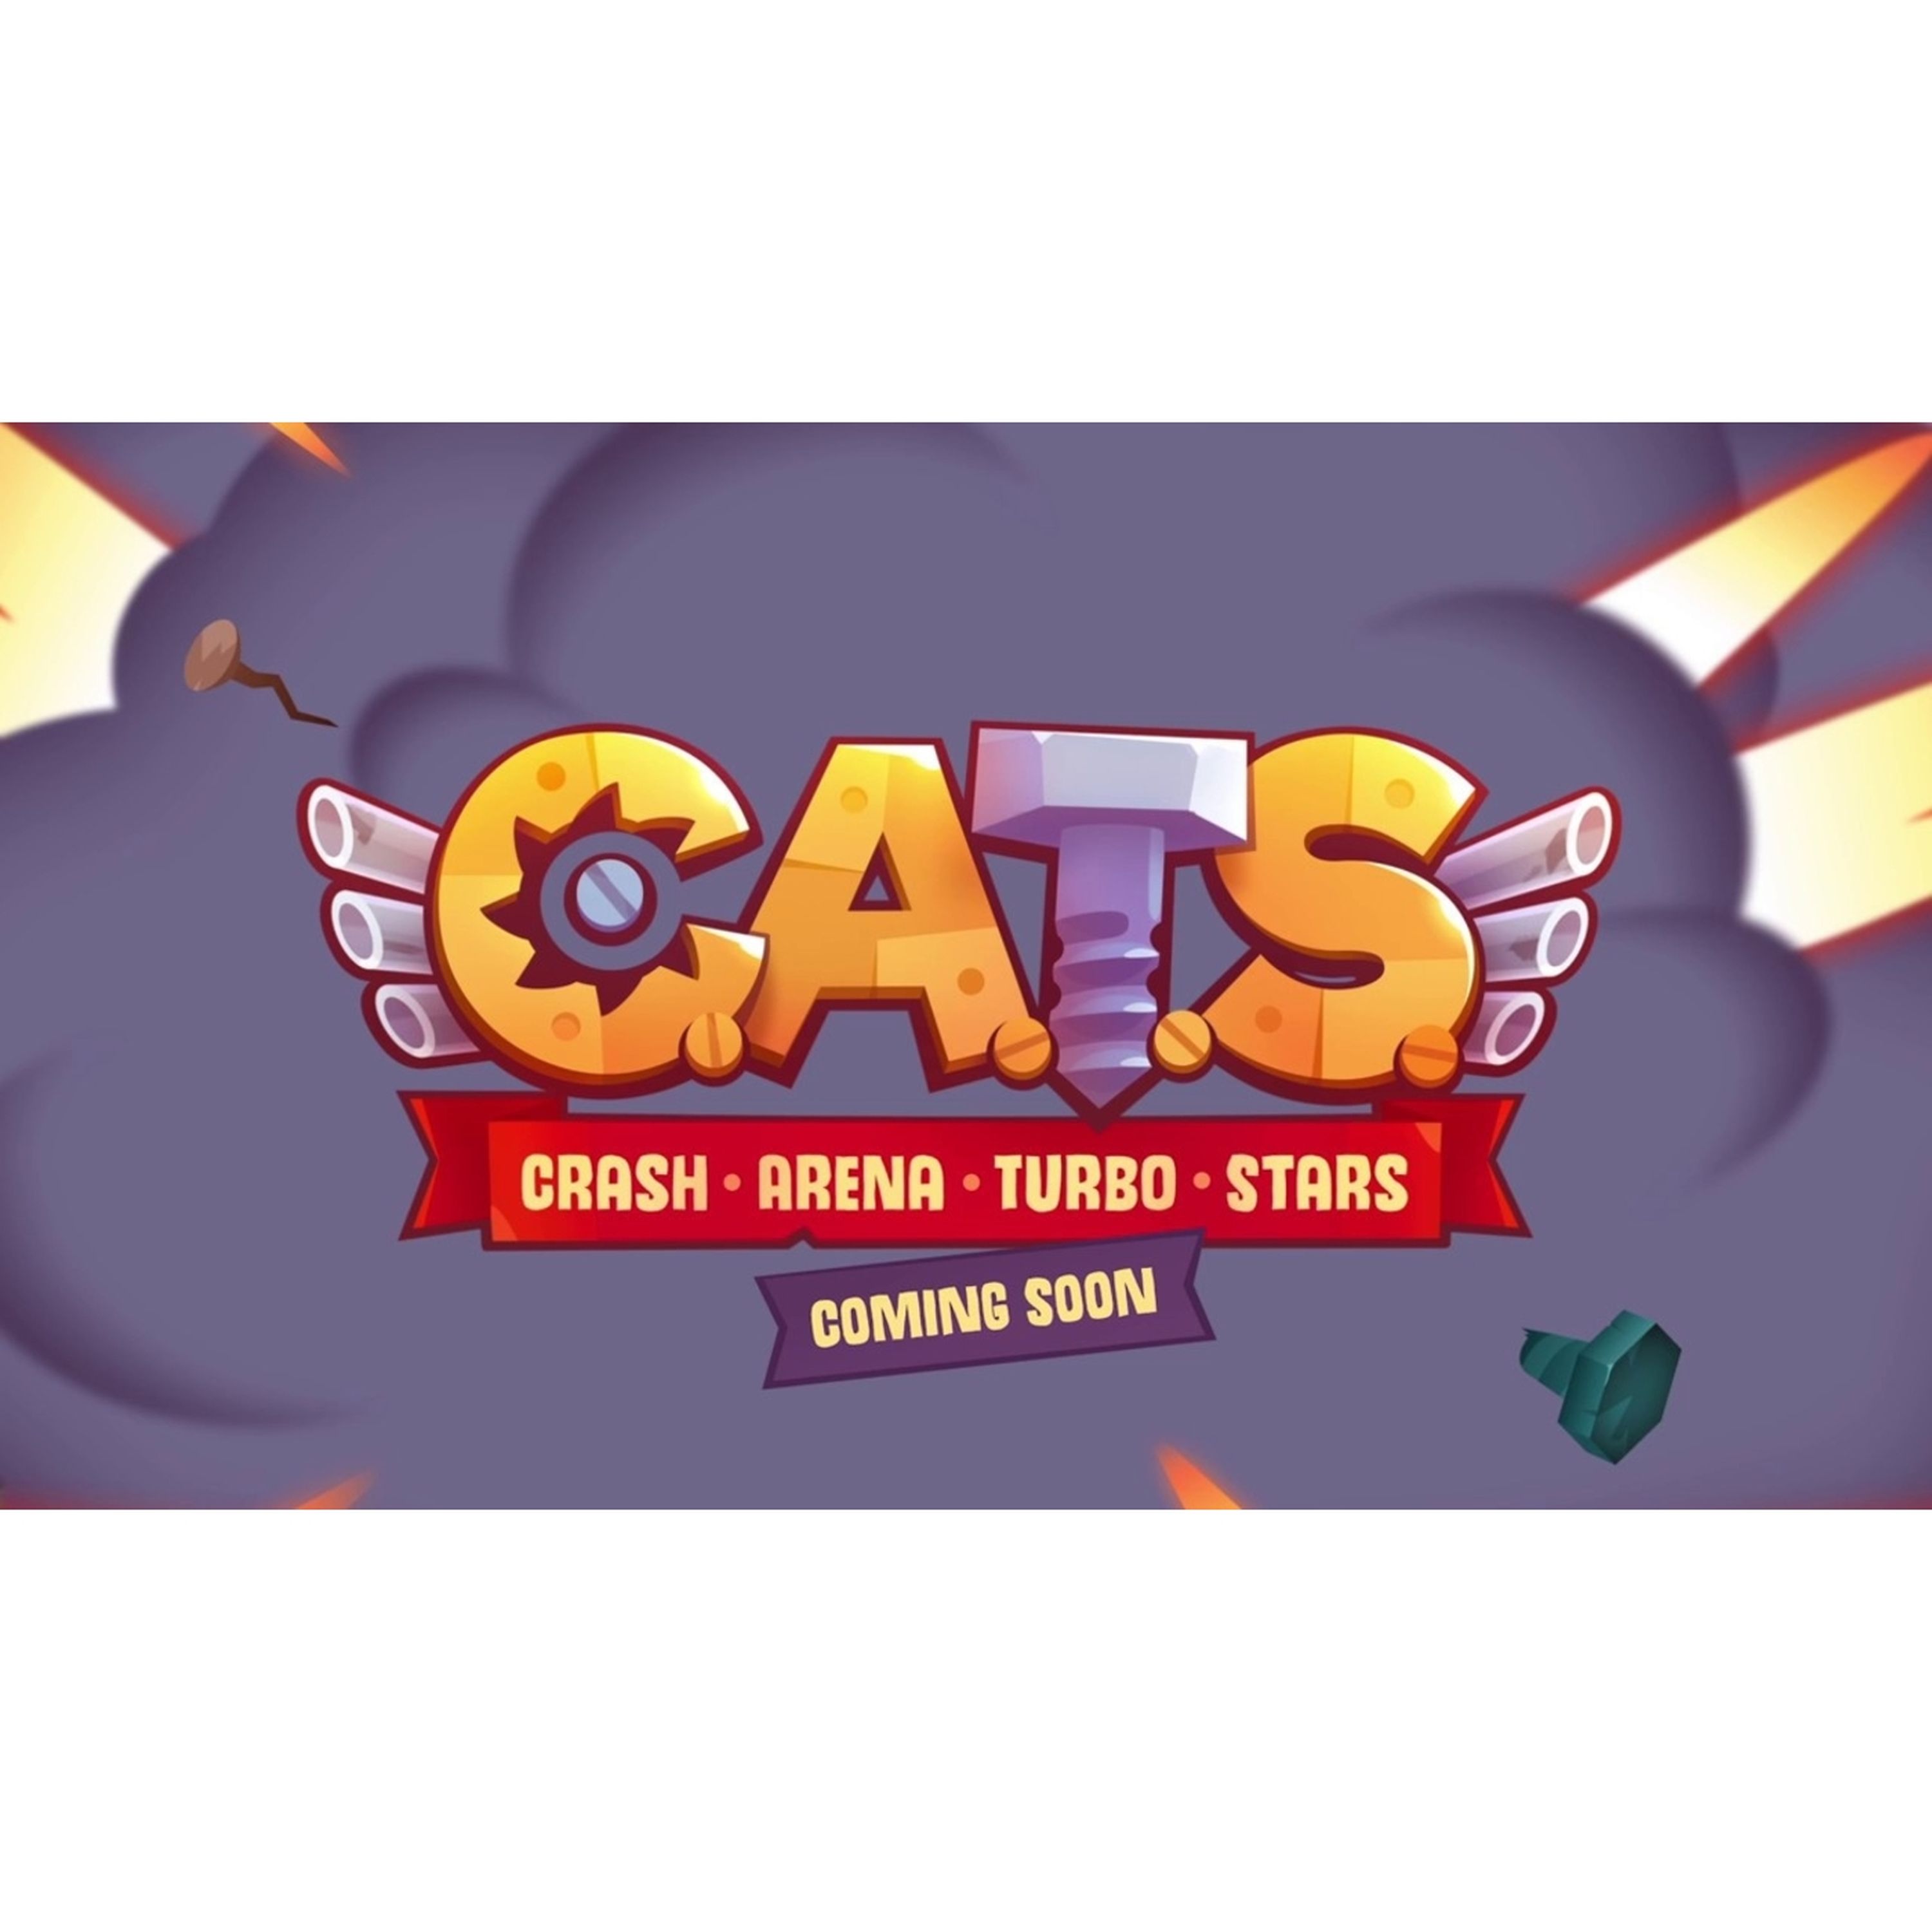 cats crash arena turbo stars view more ads